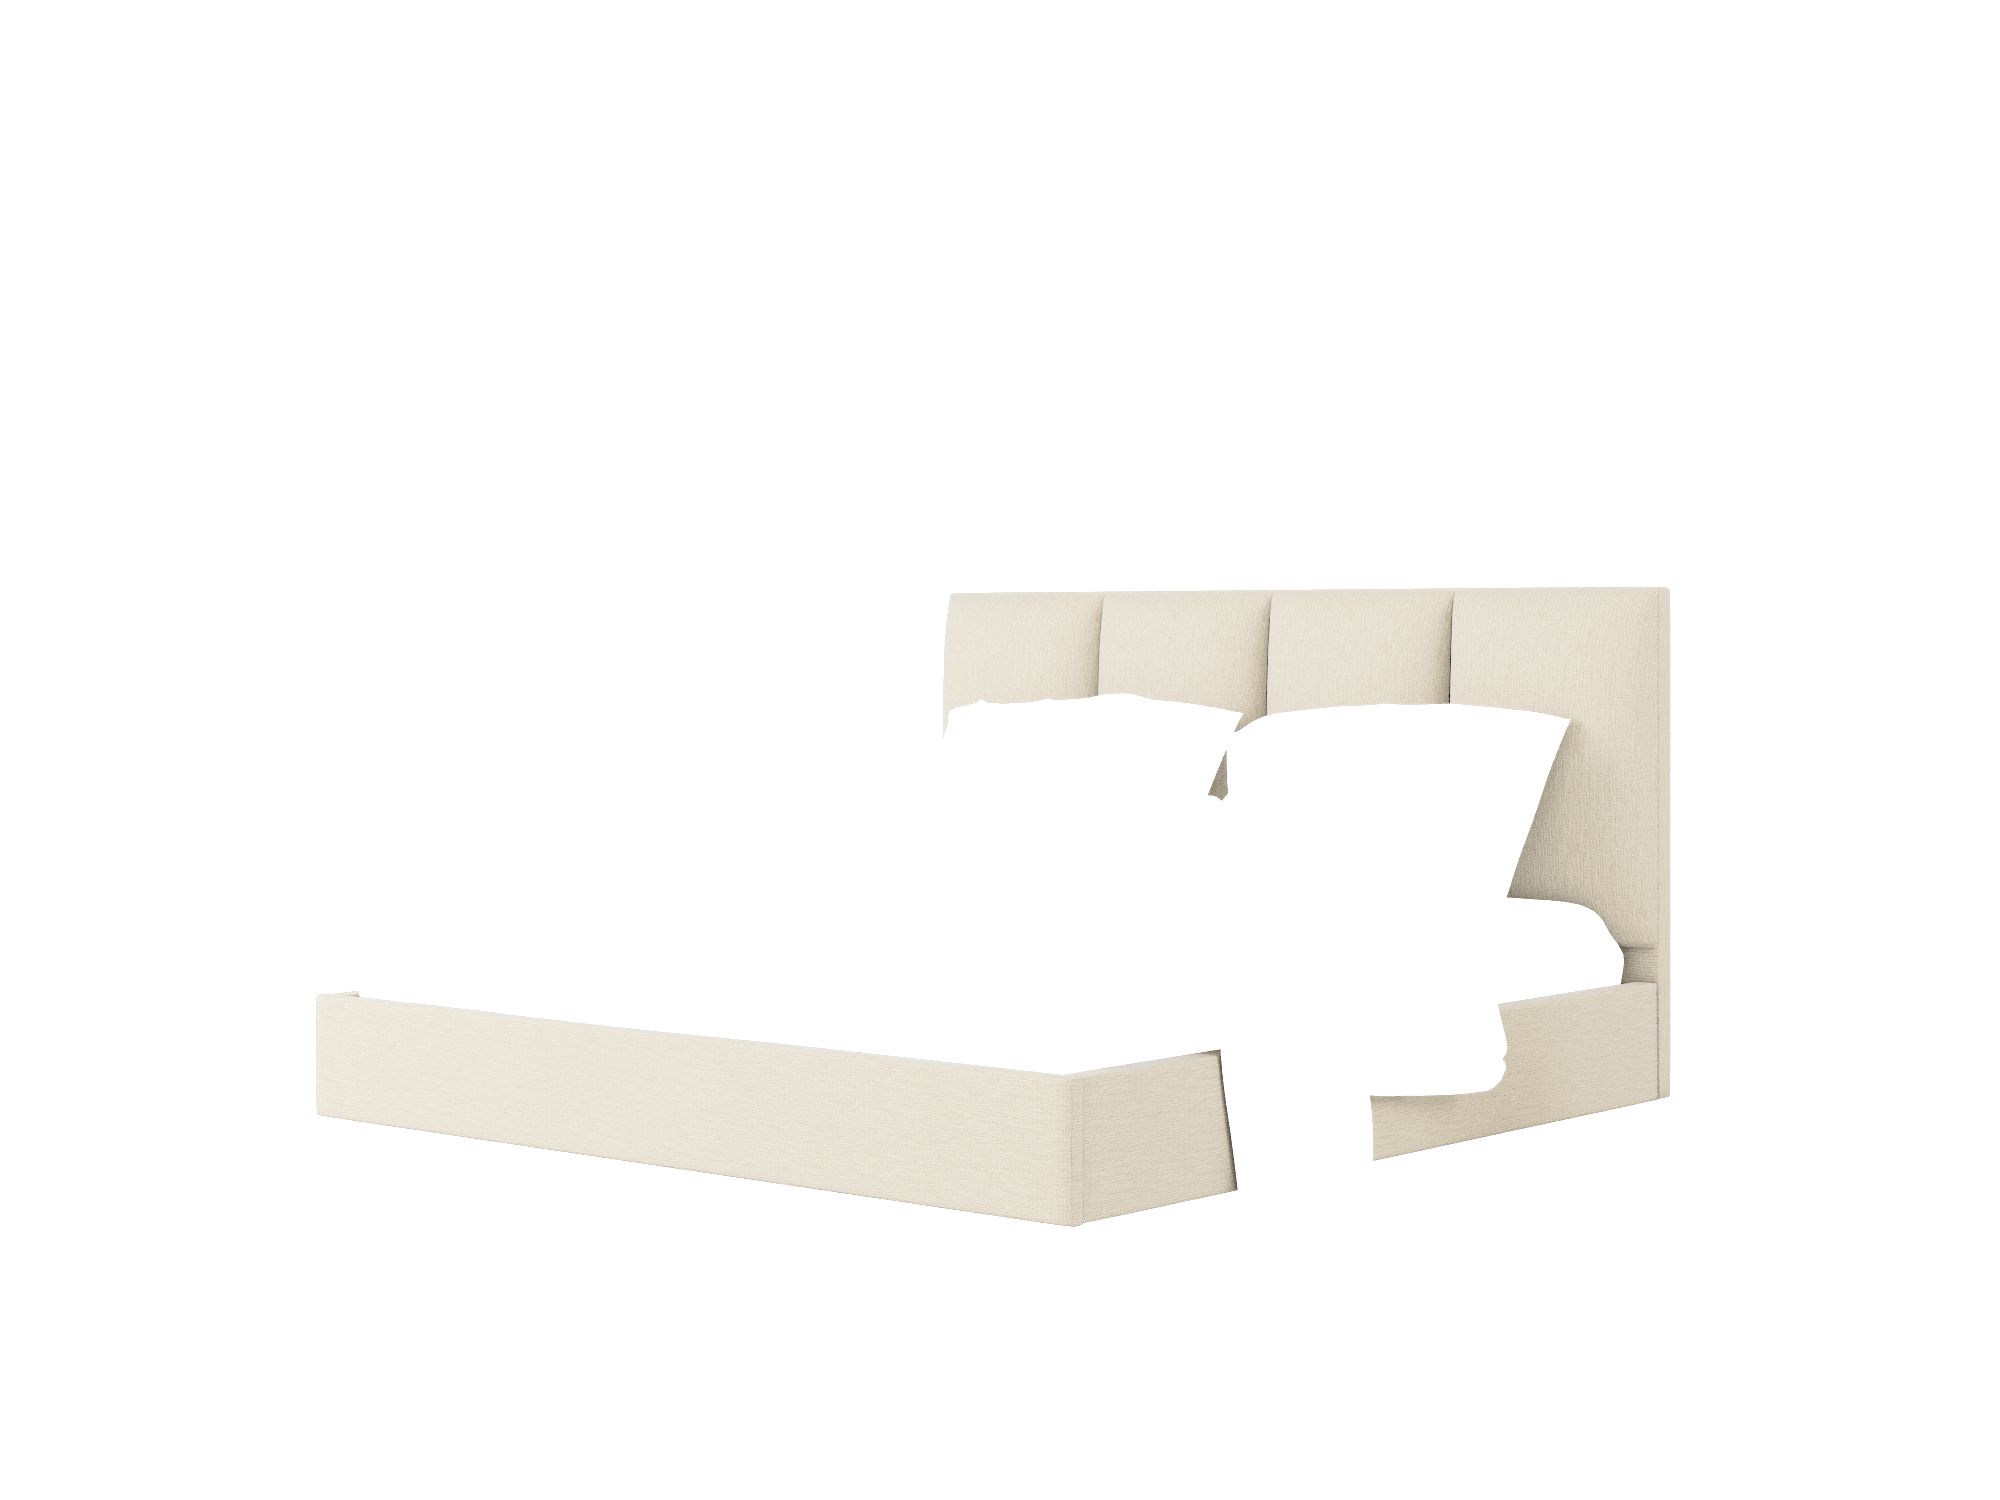 Celine Rocket Dove Bed King Room Texture